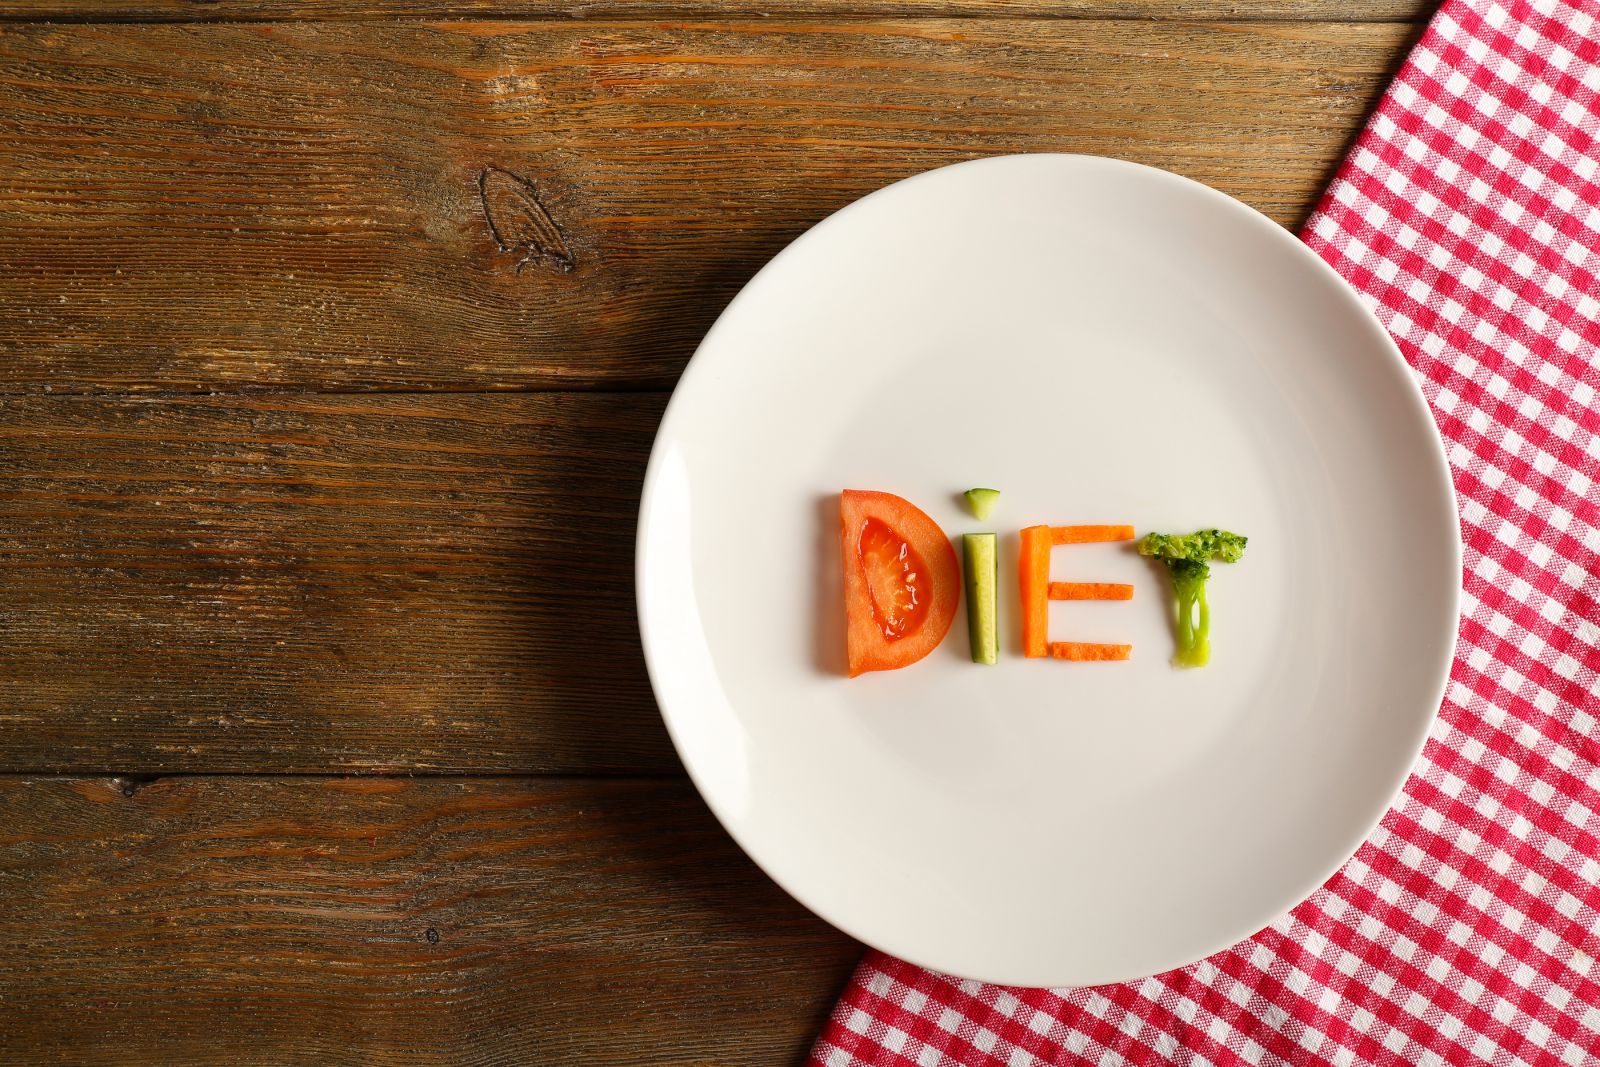 H δίαιτα των μονάδων: Ιδανική για αδυνάτισμα ή απάτη;